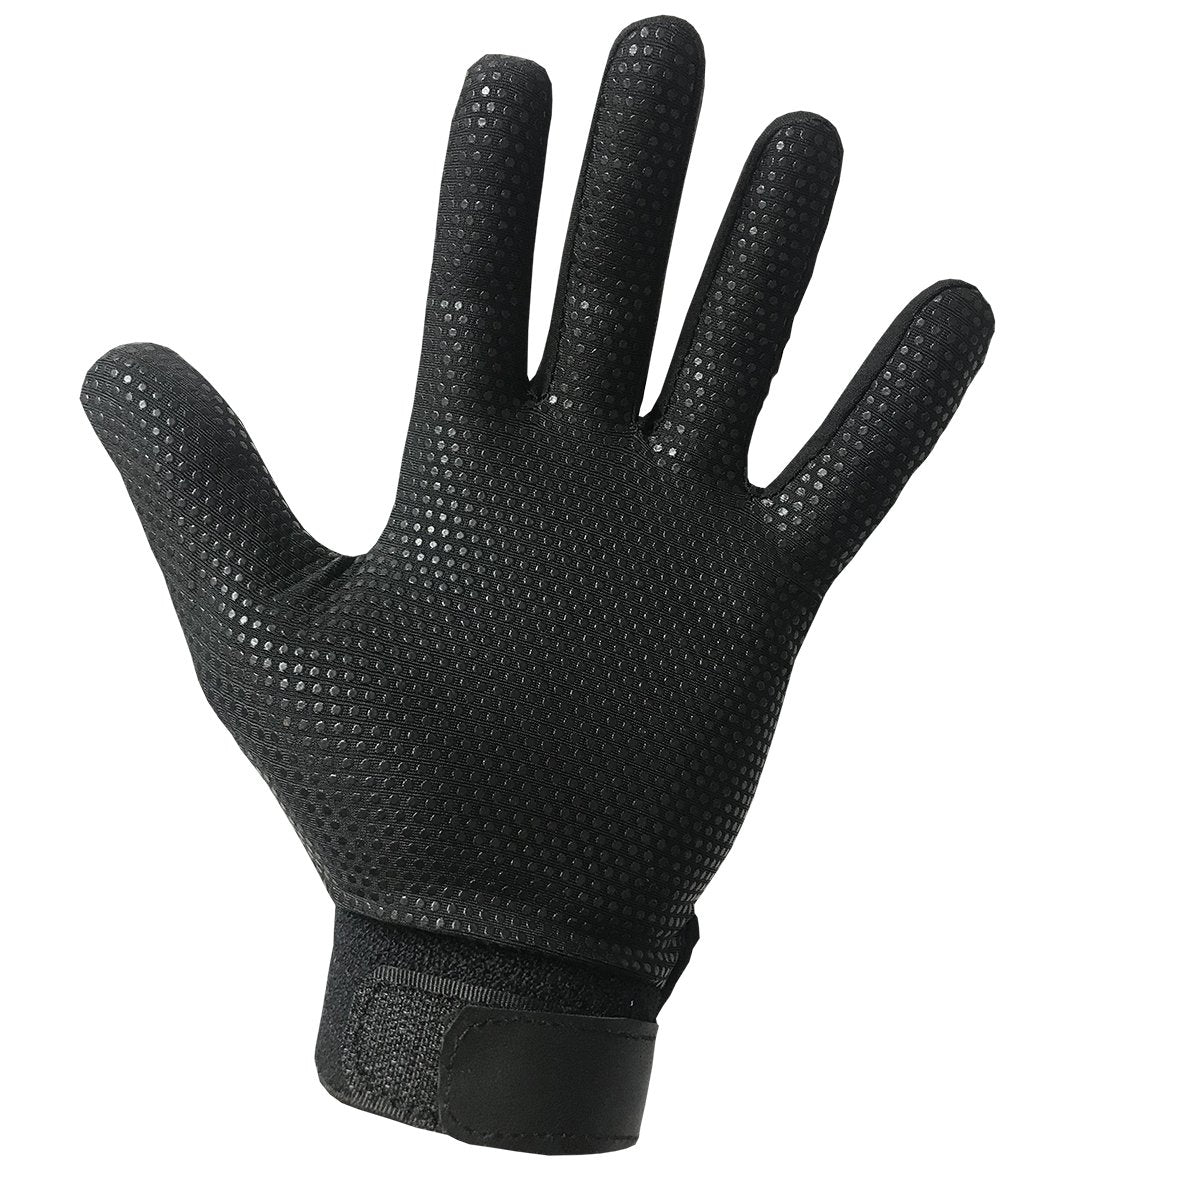 Mercian Winter Gloves